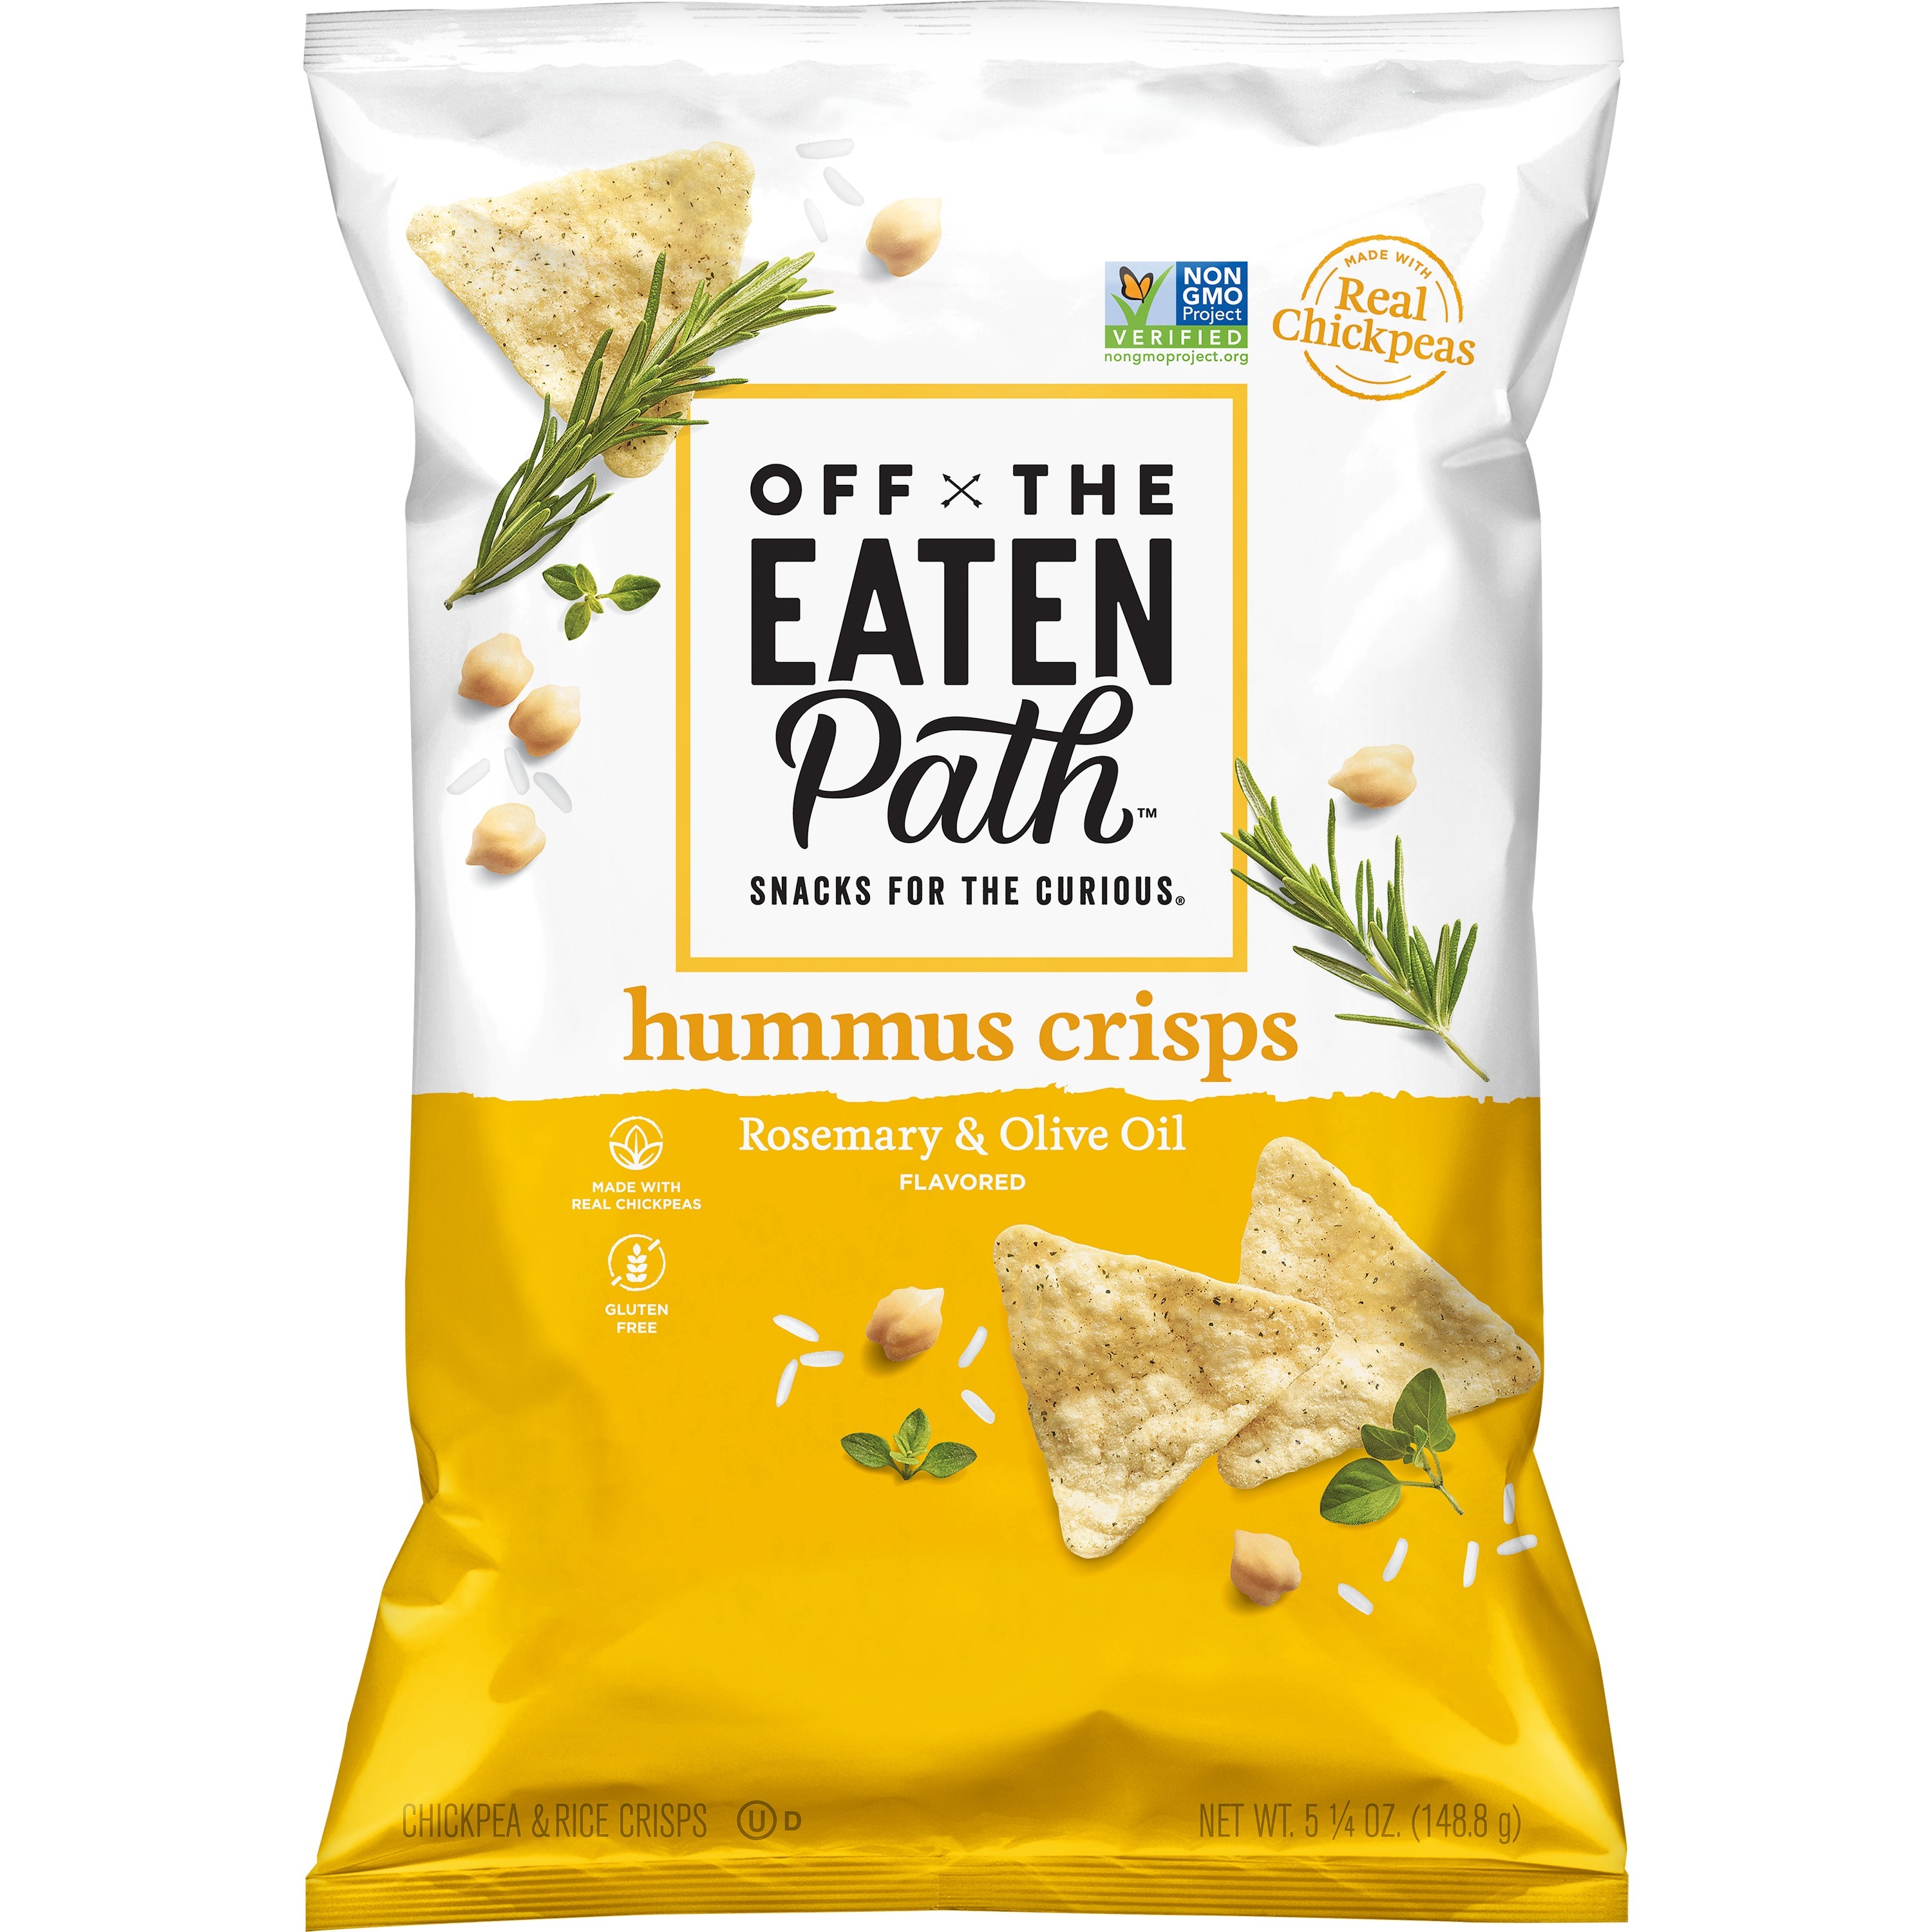 Off the Eaten Path Hummus Crisps, Rosemary & Olive Oil, 5.25 oz Bag - image 1 of 7